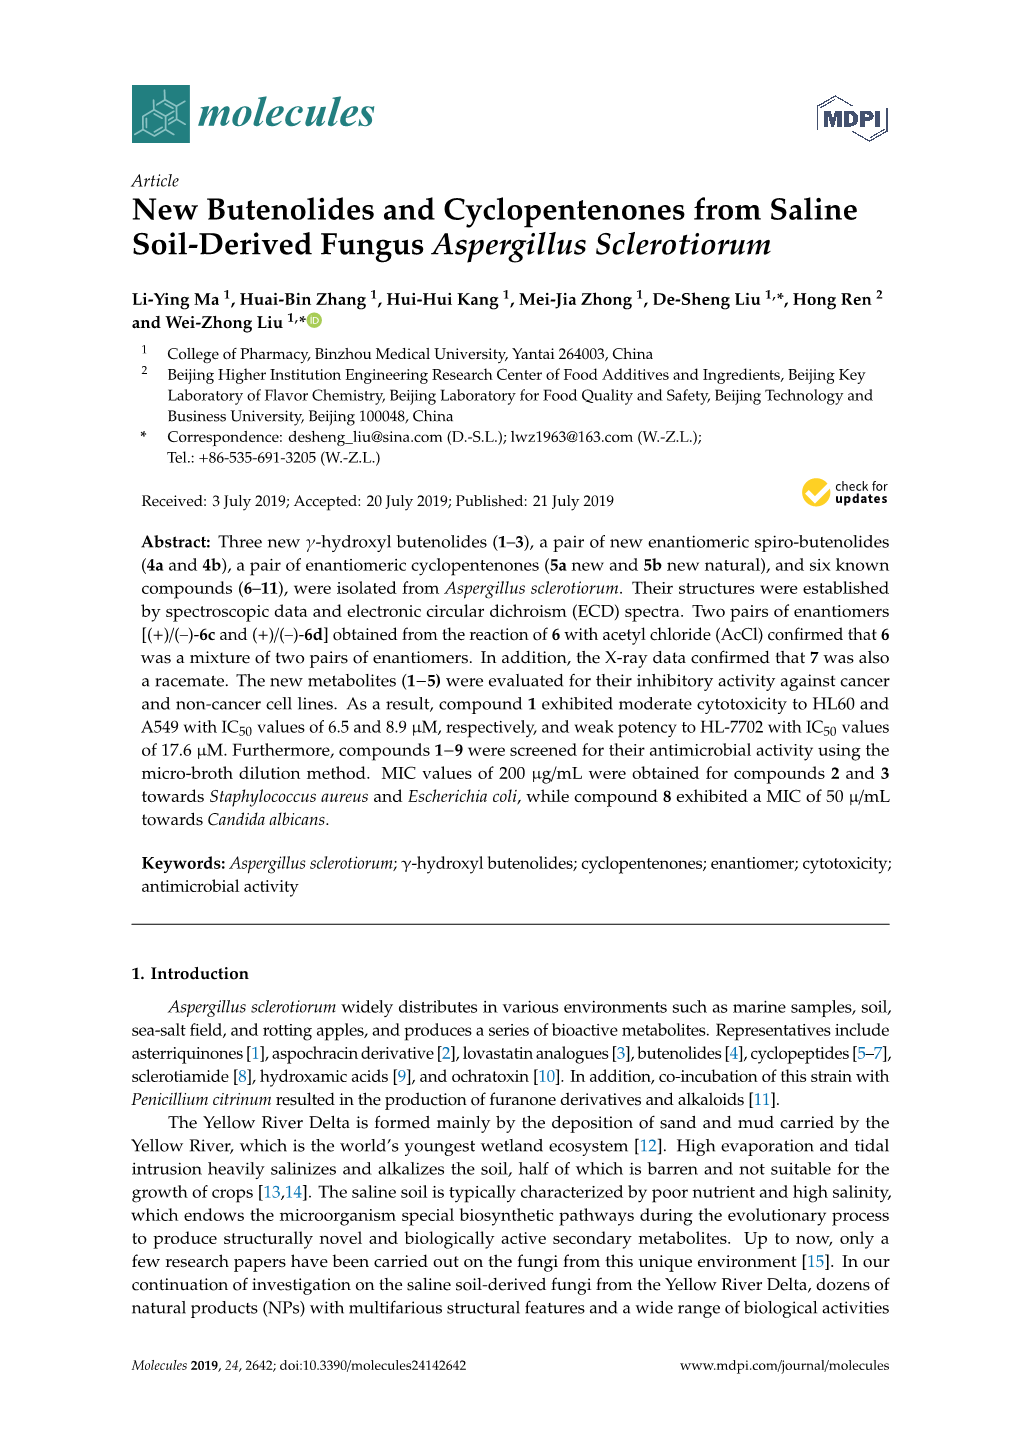 New Butenolides and Cyclopentenones from Saline Soil-Derived Fungus Aspergillus Sclerotiorum